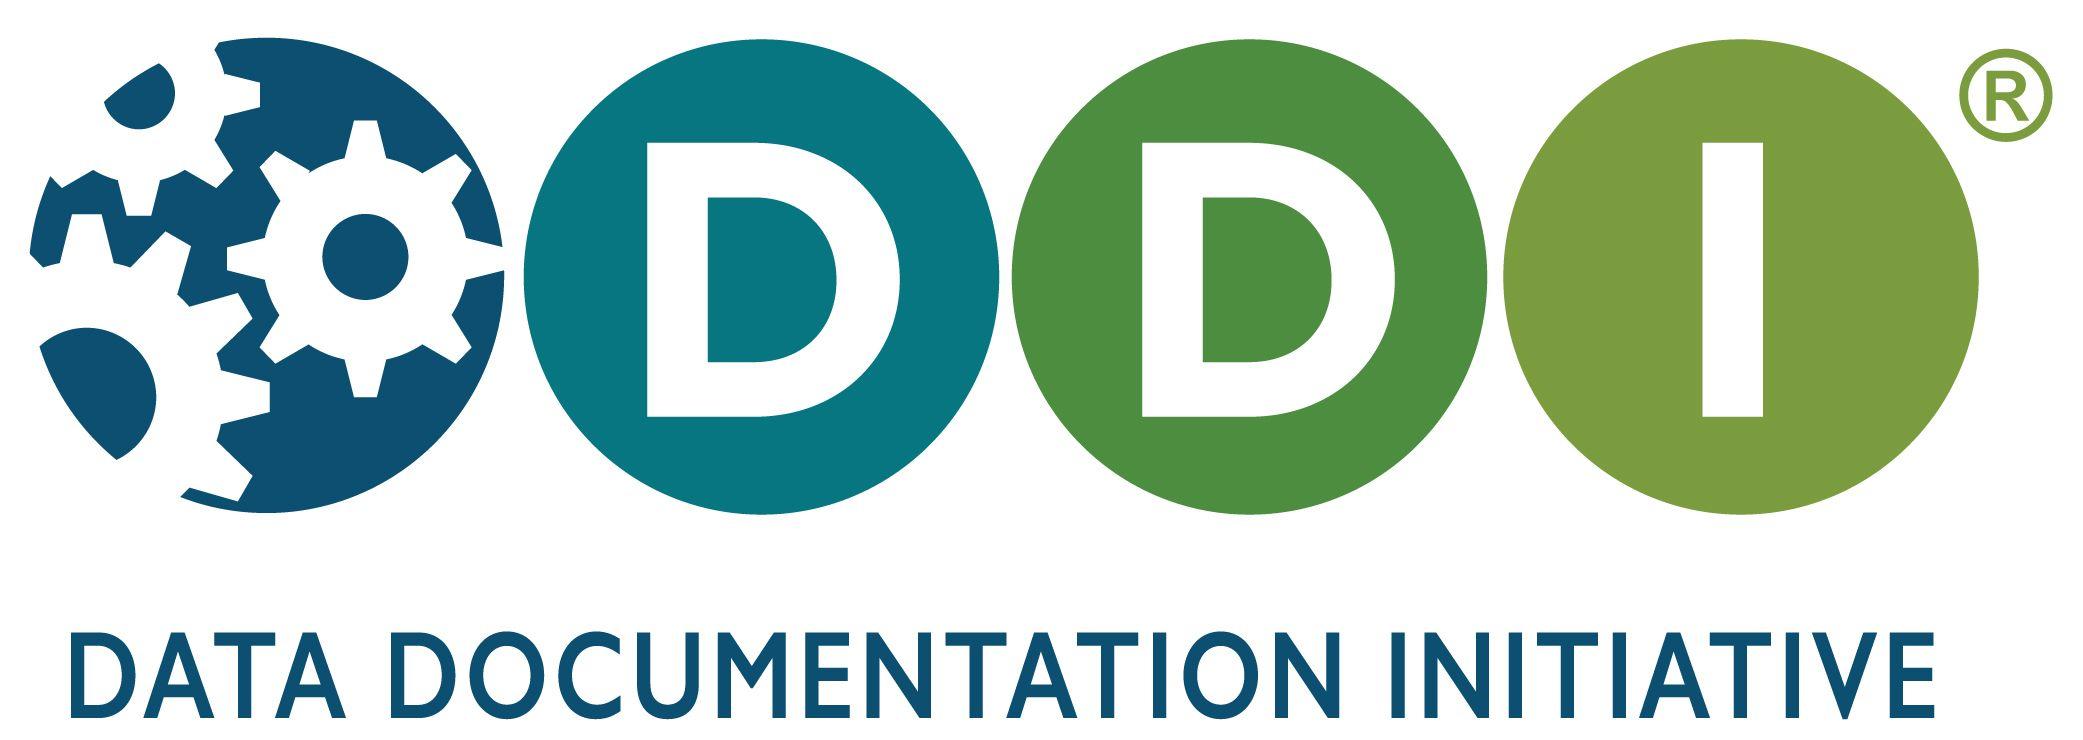 Documentation Logo - Logo & Marketing Materials. Data Documentation Initiative